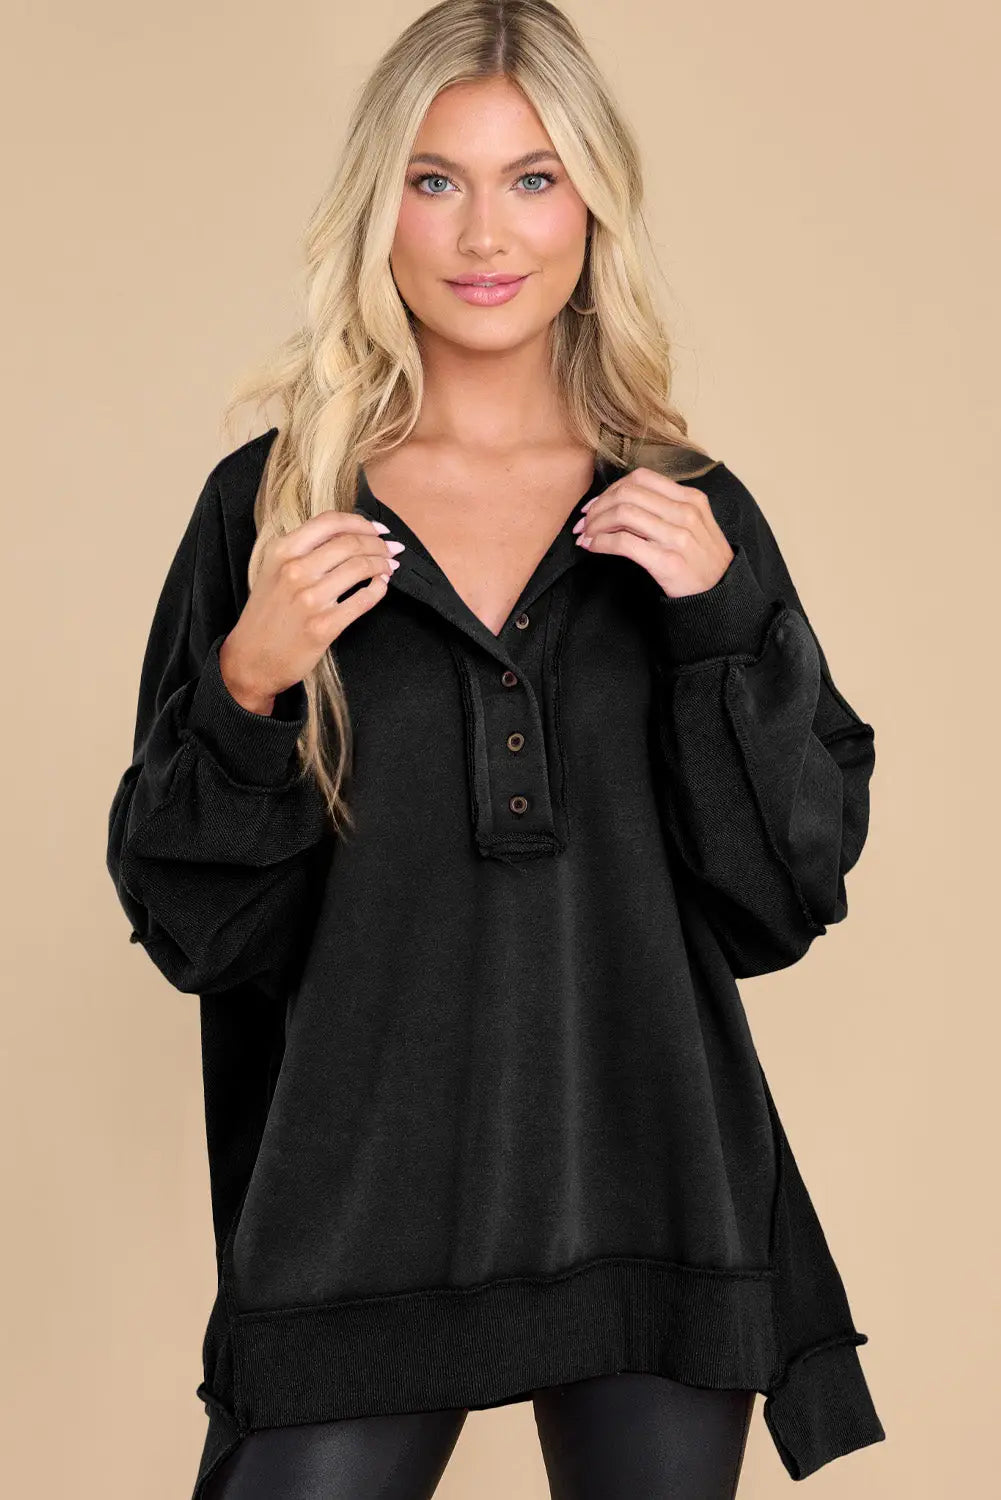 Black oversized exposed seam henley sweatshirt - sweatshirts & hoodies